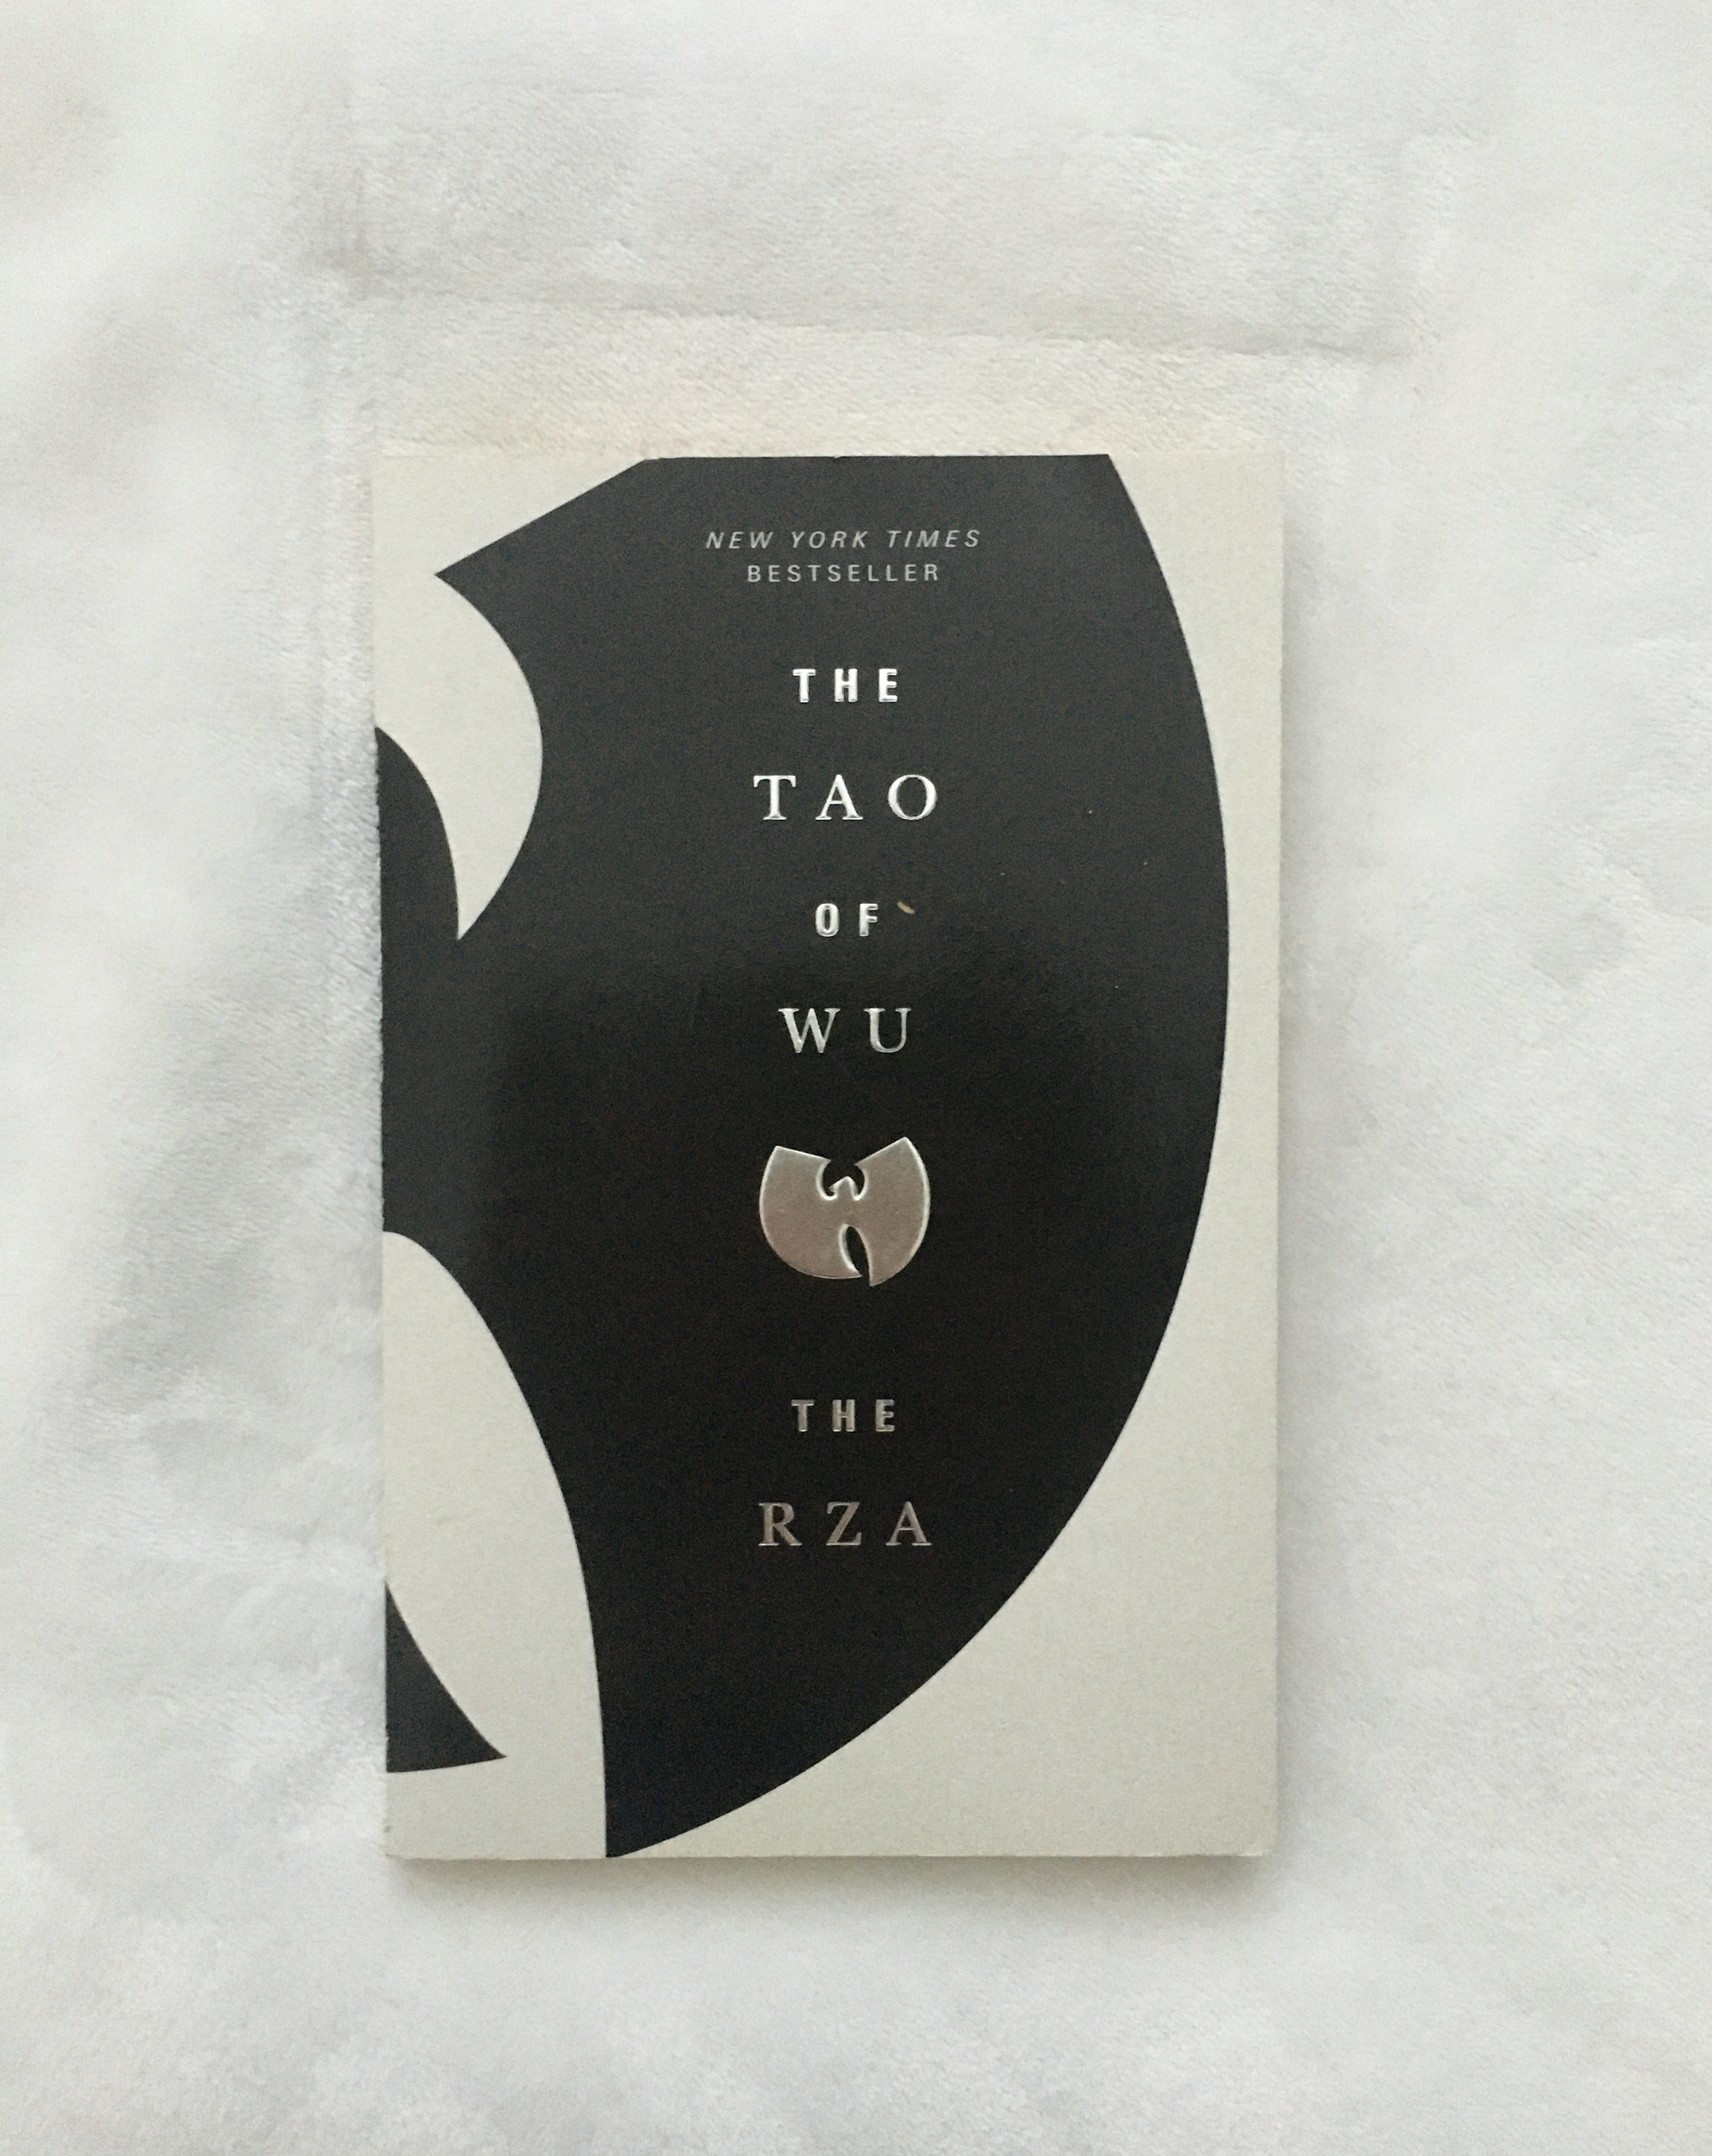 The Tao of WU by RZA, book, Ten Dollar Books, Ten Dollar Books